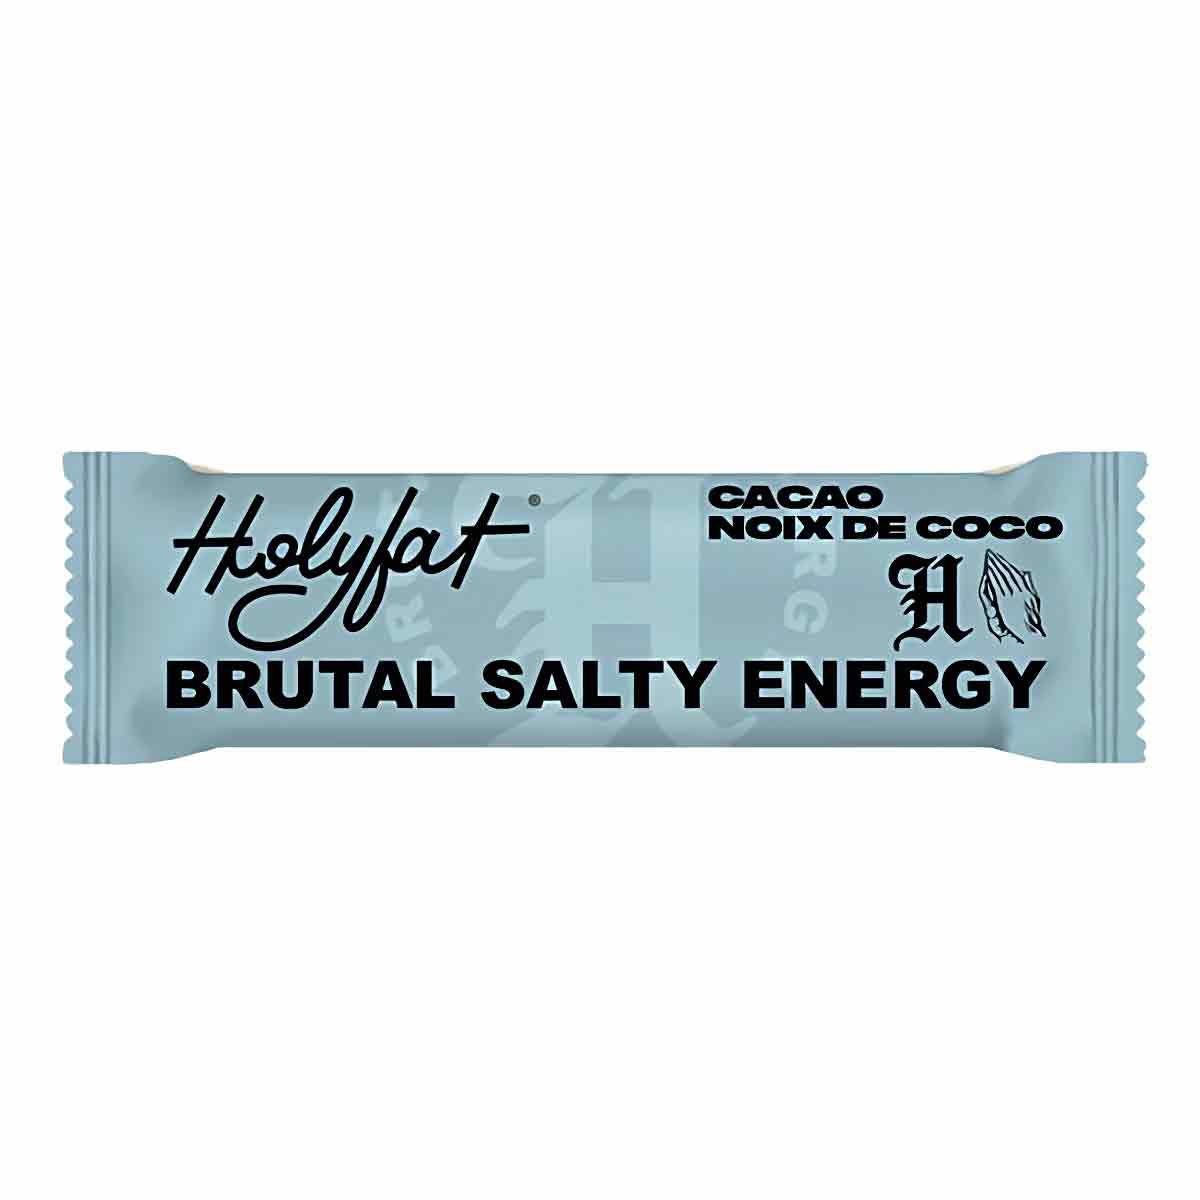 Holyfat energy bar - Cacoa, coconut